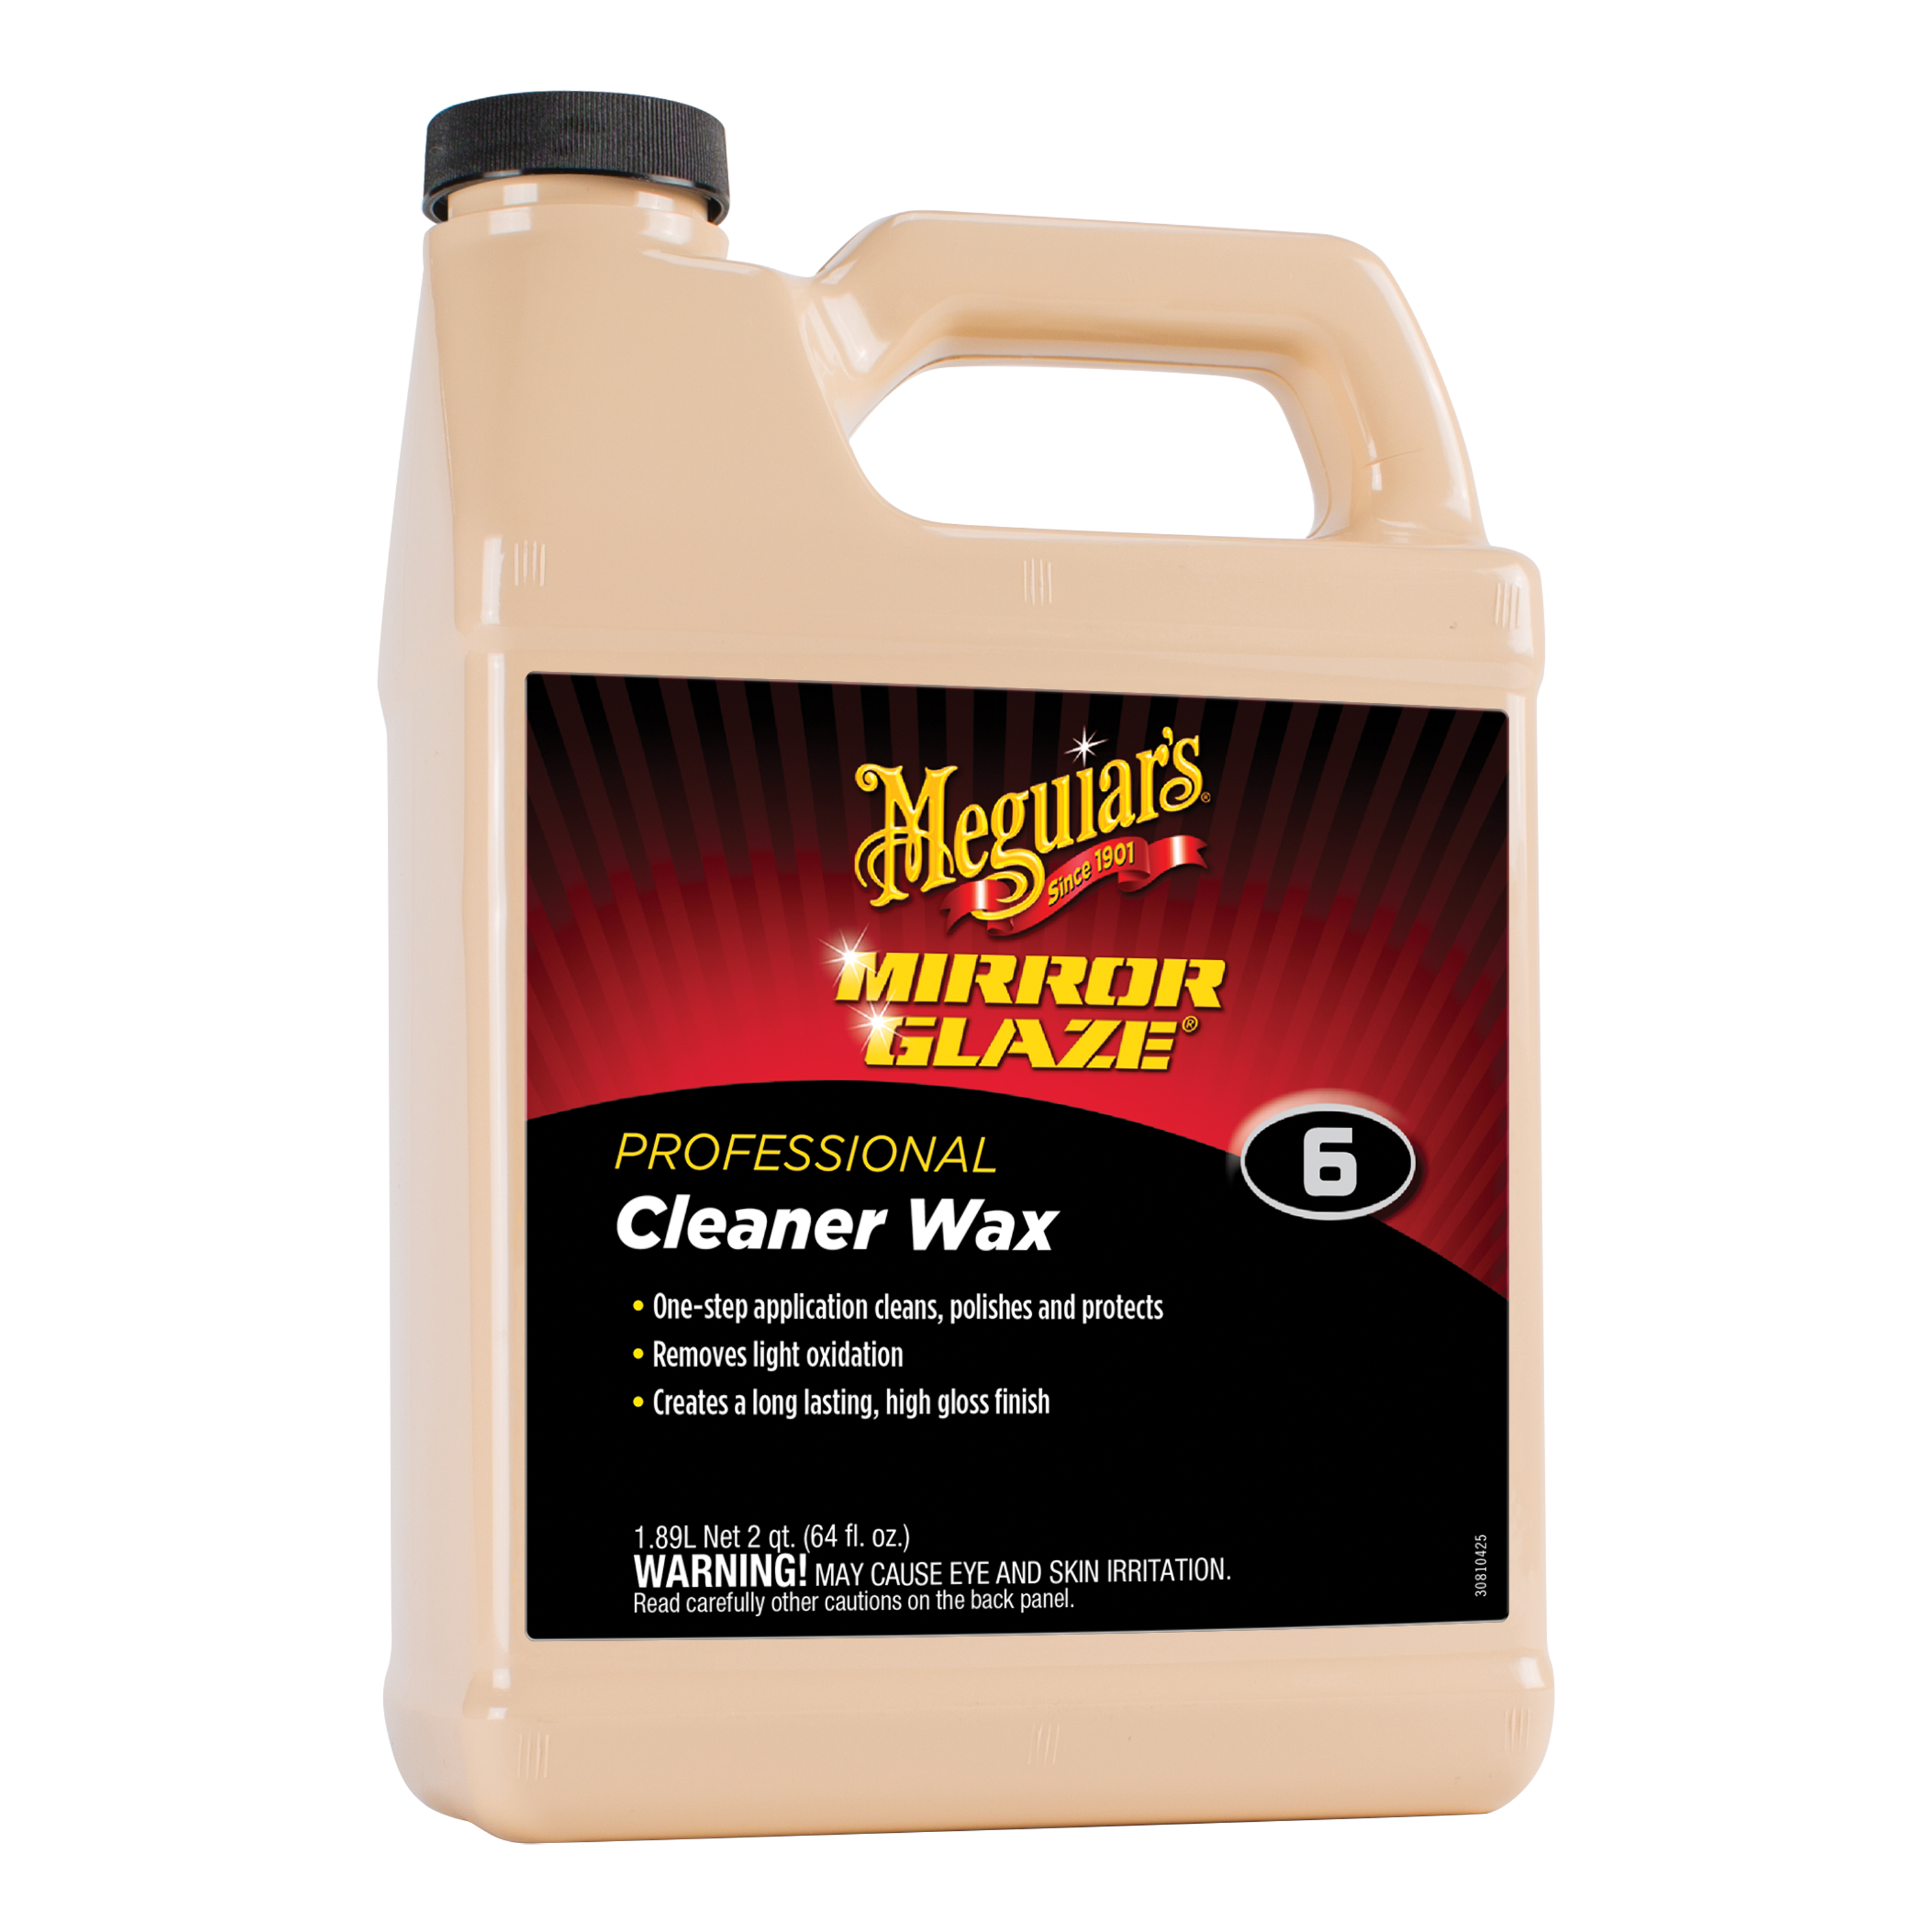 Meguiars M0664 Cleaner / Wax, 64 oz